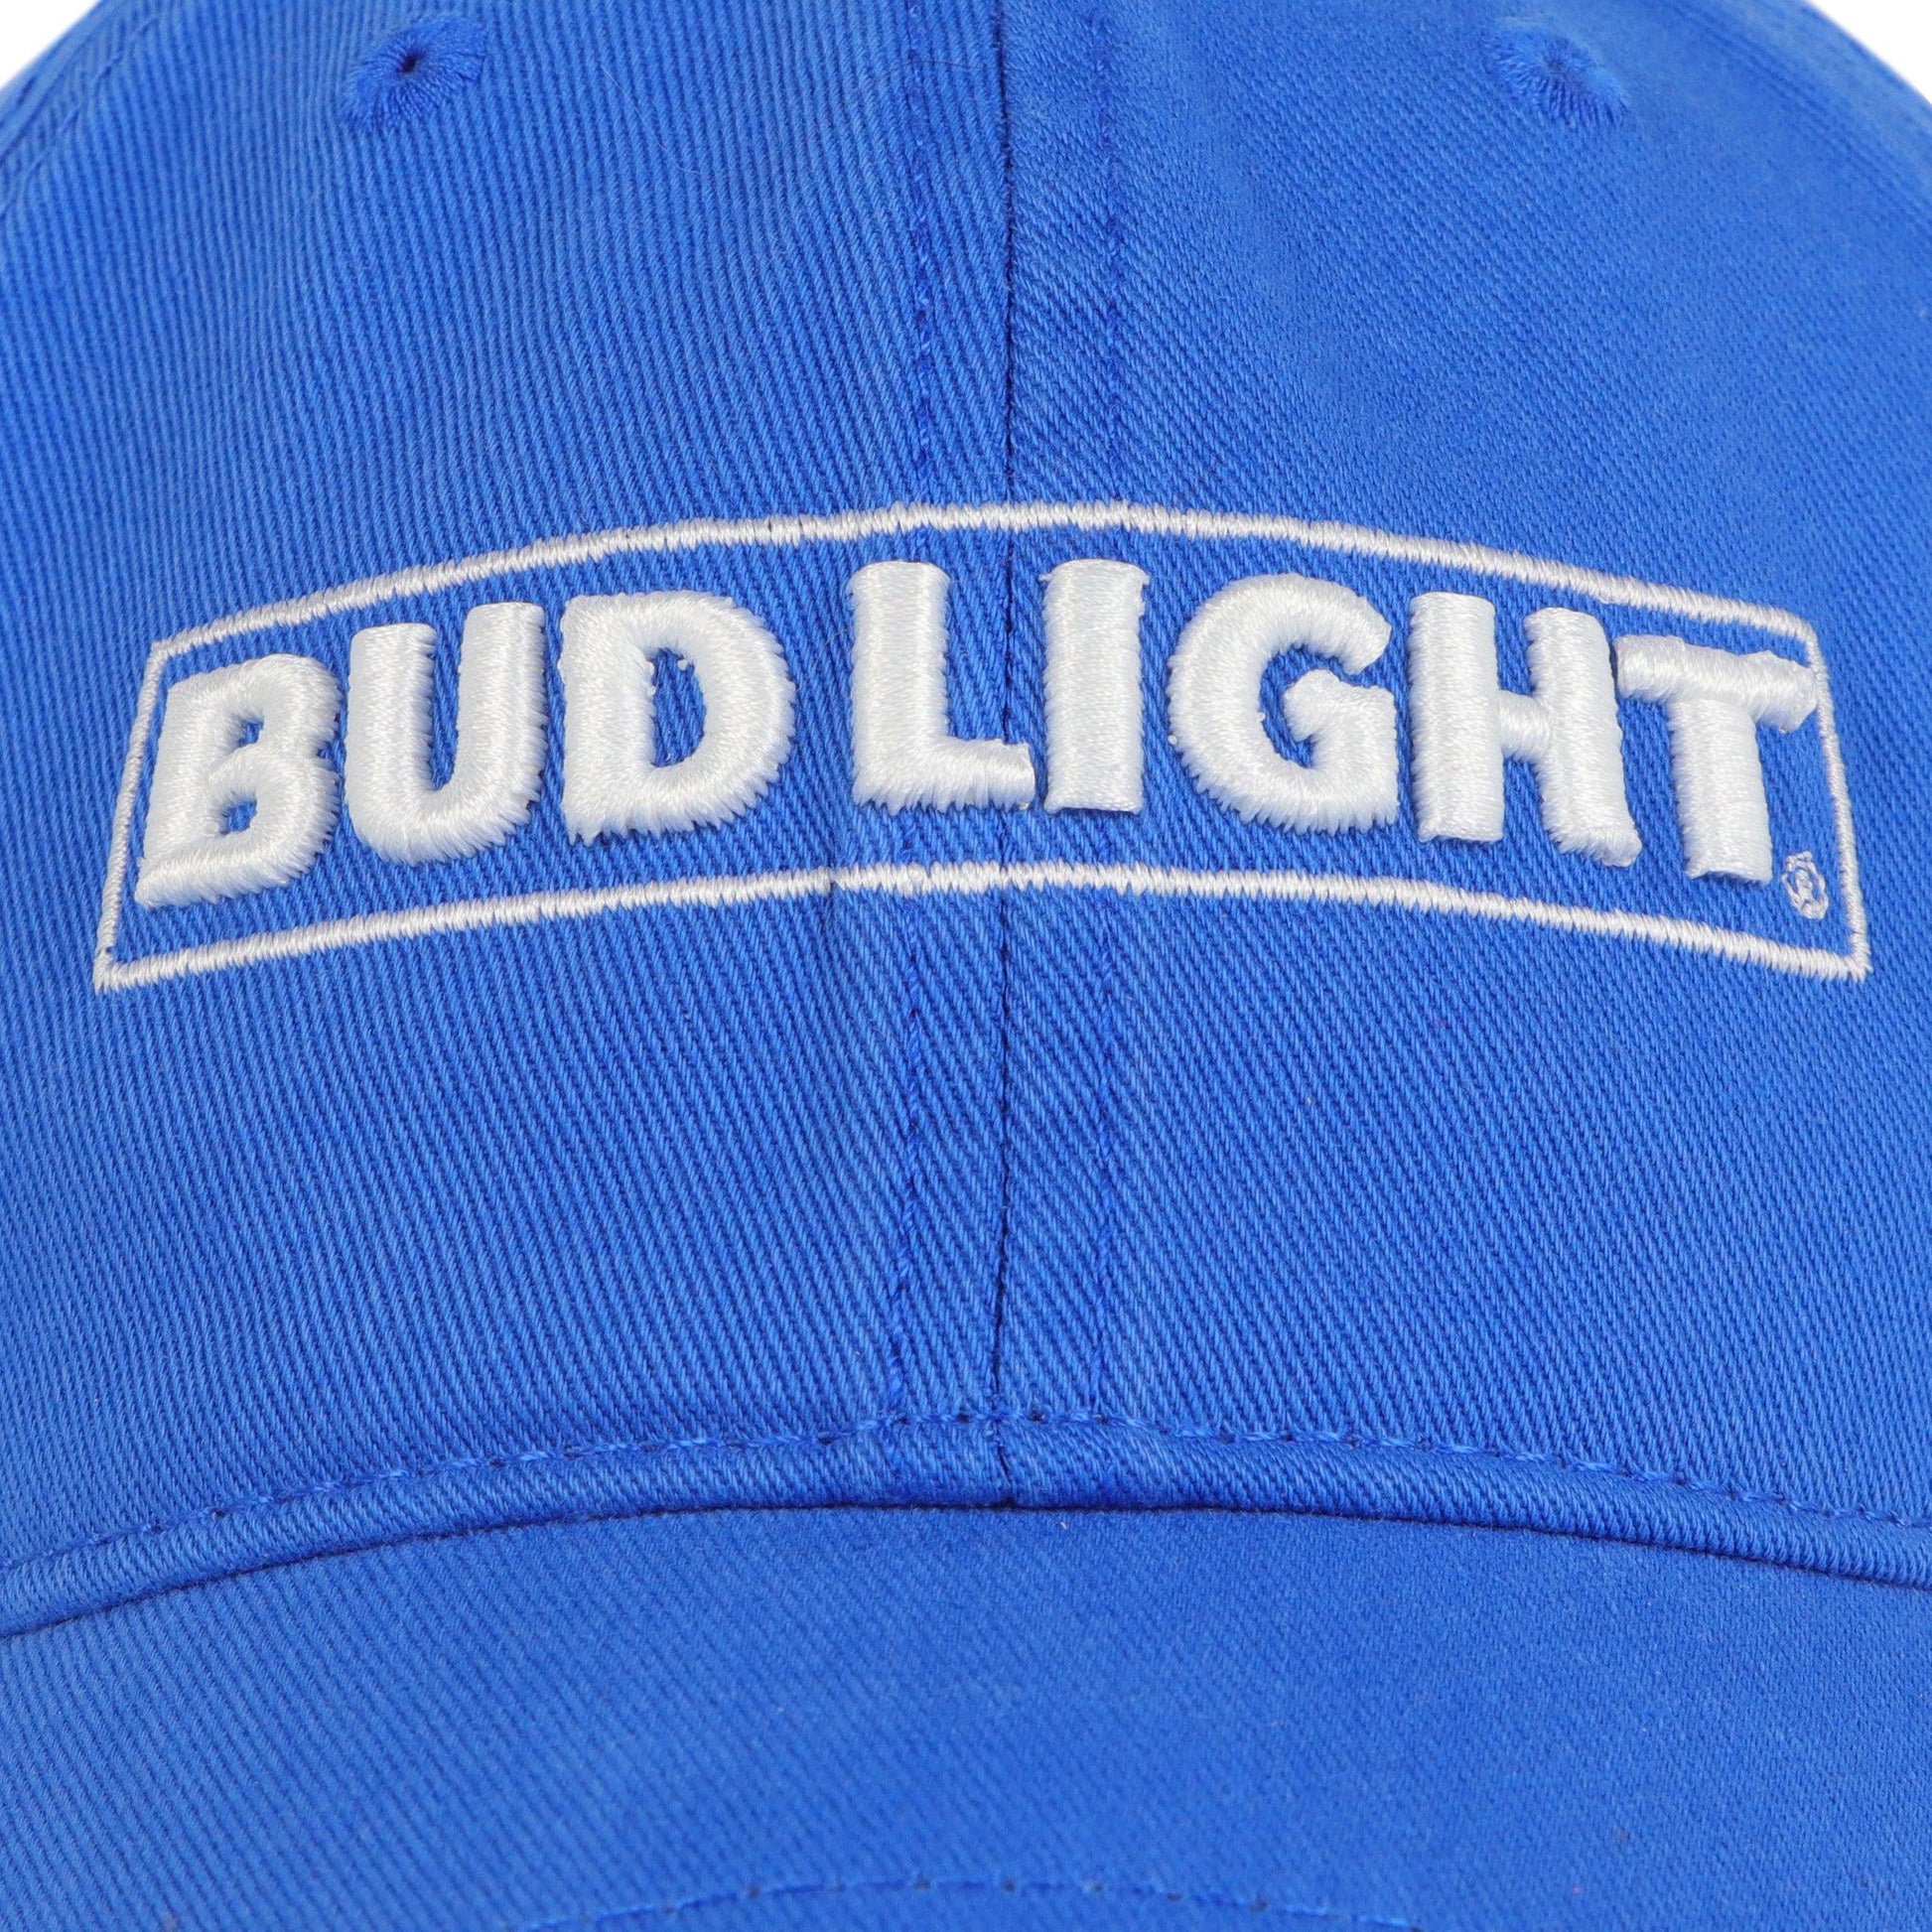 Close up of white embroidered Bud Light horizontal logo.